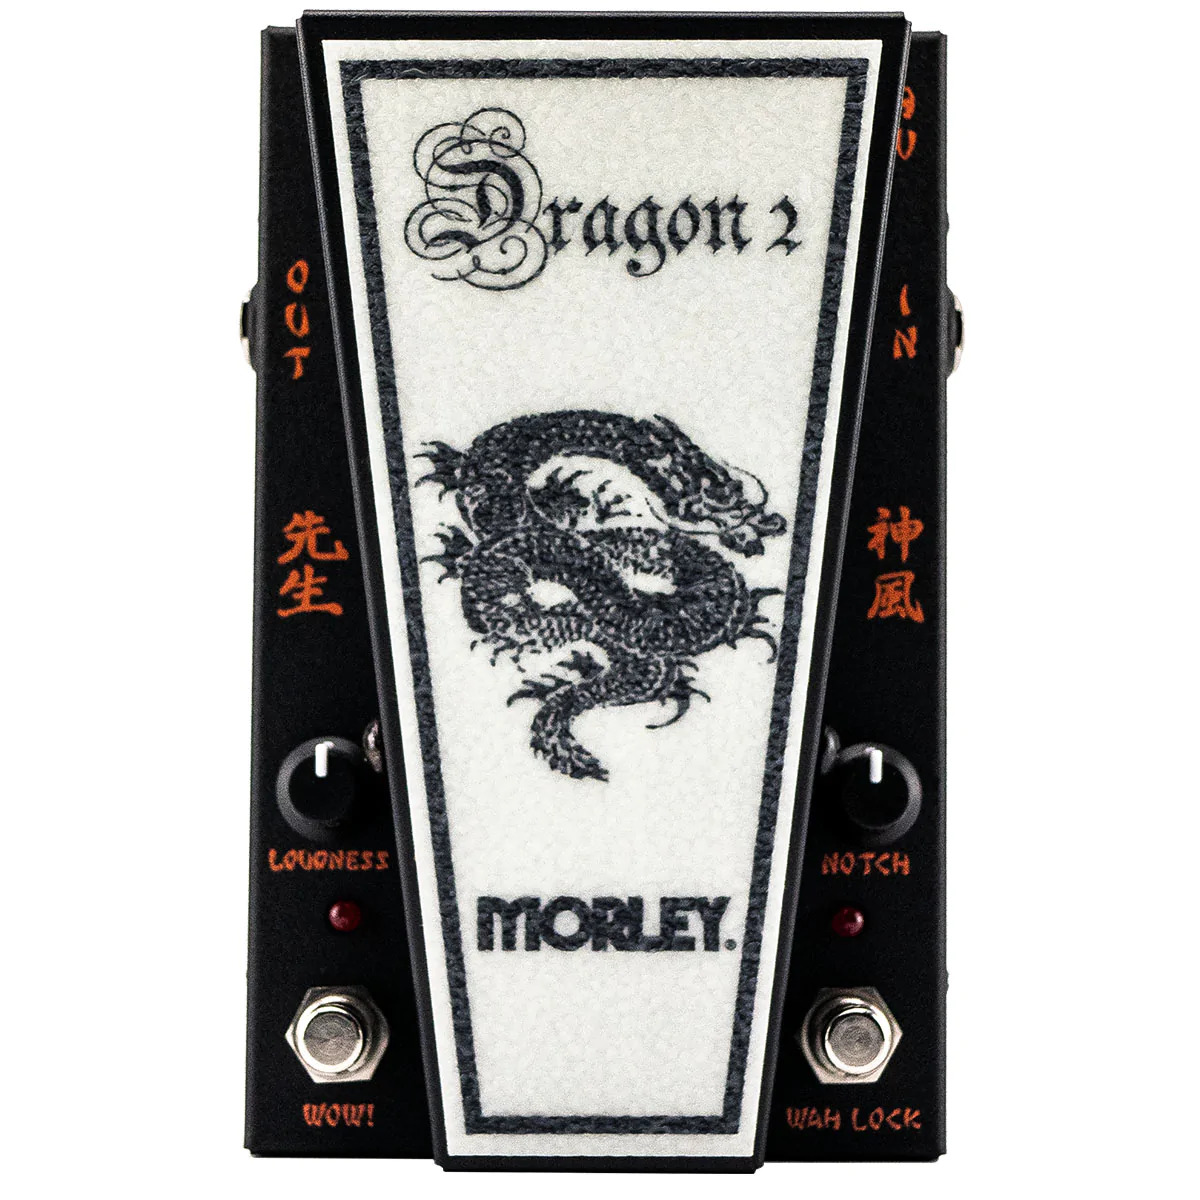 Morley 20/20 George Lynch Dragon 2 Wah Pedal Limited Edition